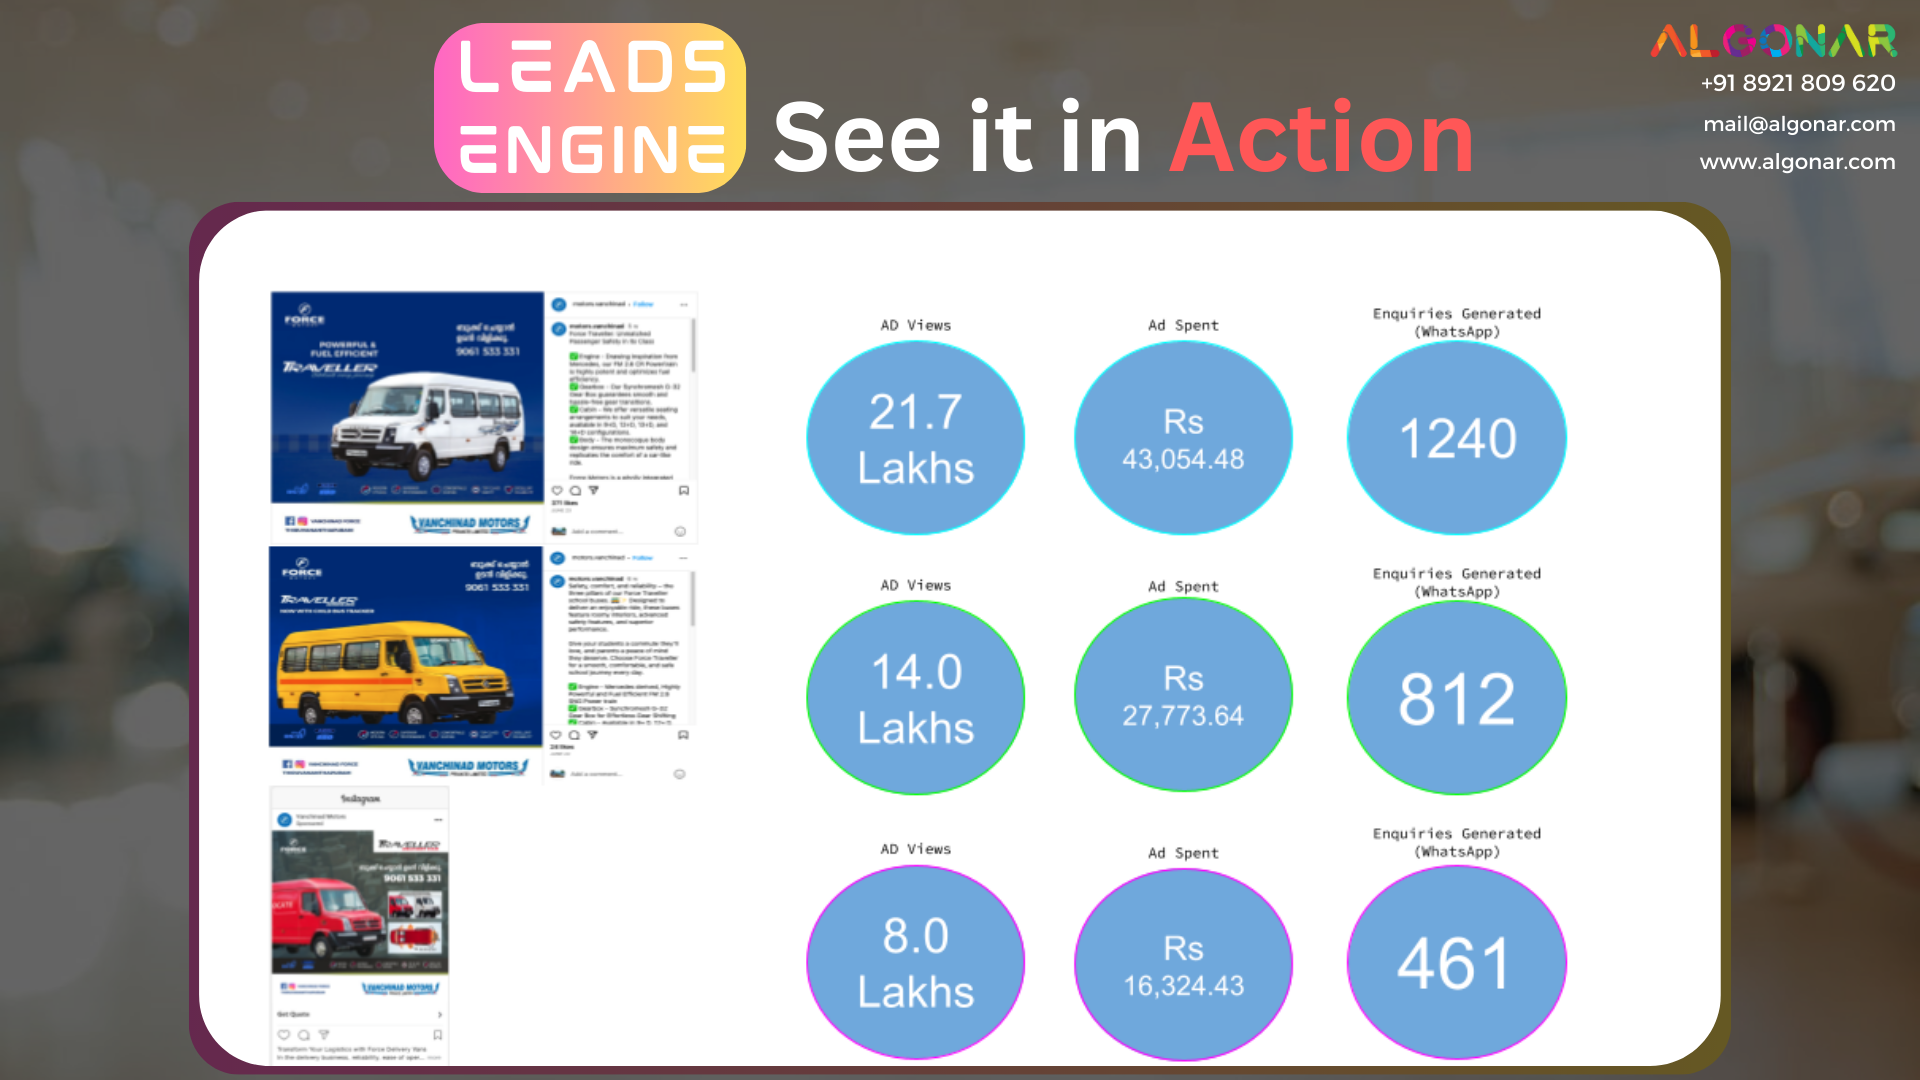 Automotive lead generation companies